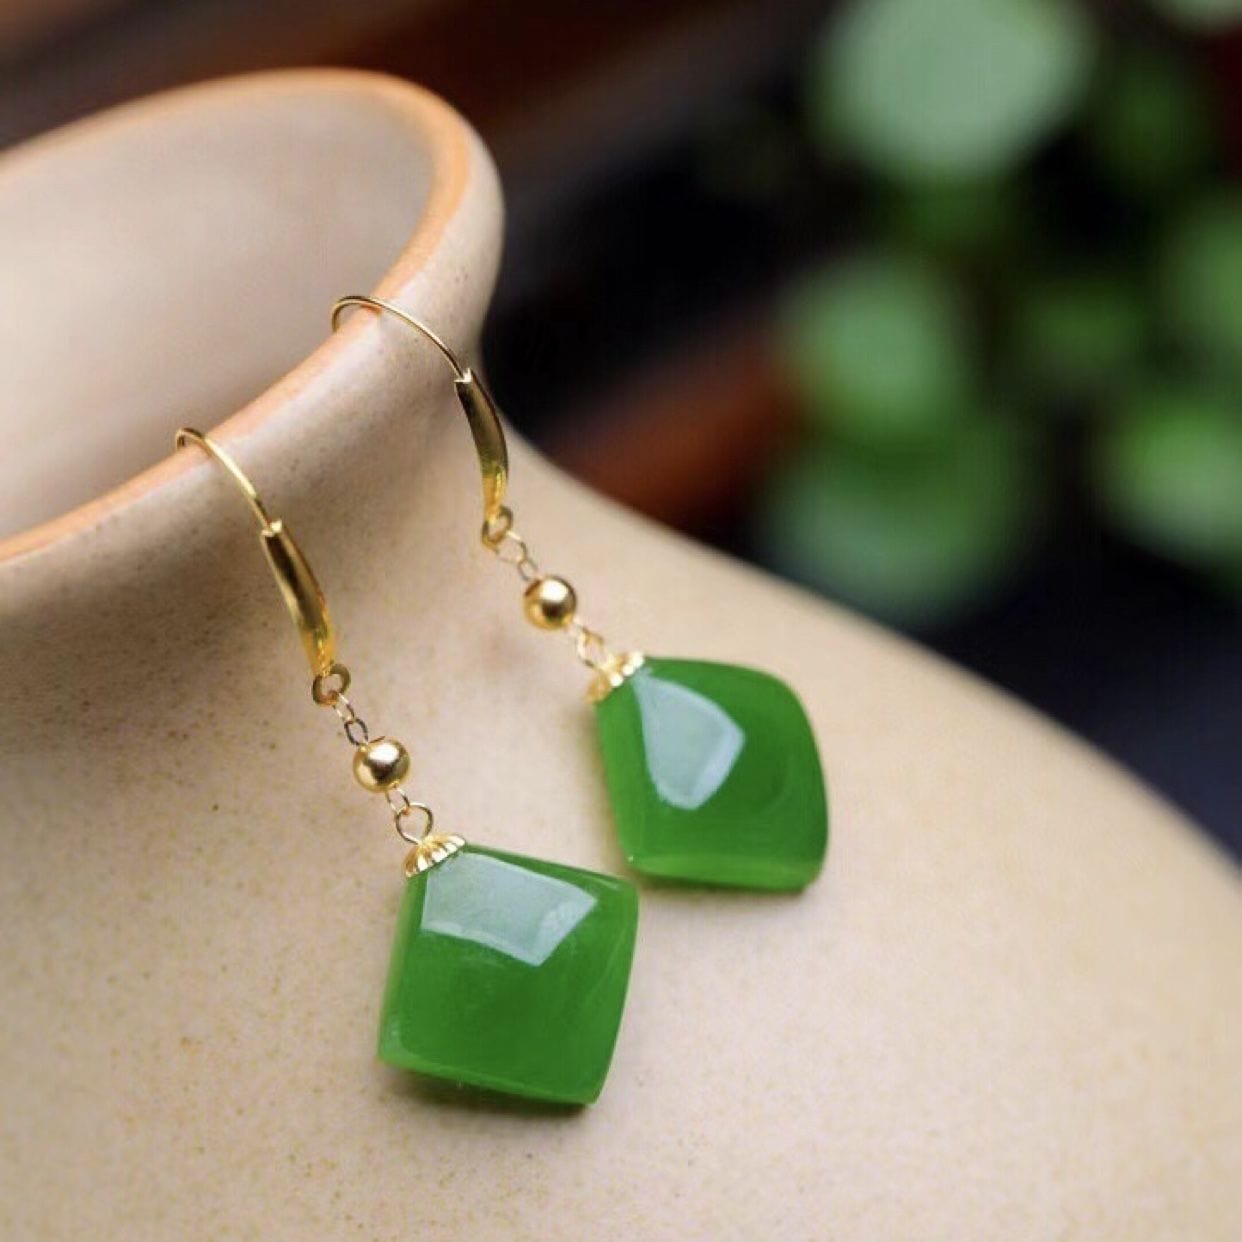 Bieauli Jewellery London Earrings Square Emerald Green Earrings, Natural Chinese Hetian Jade Earrings